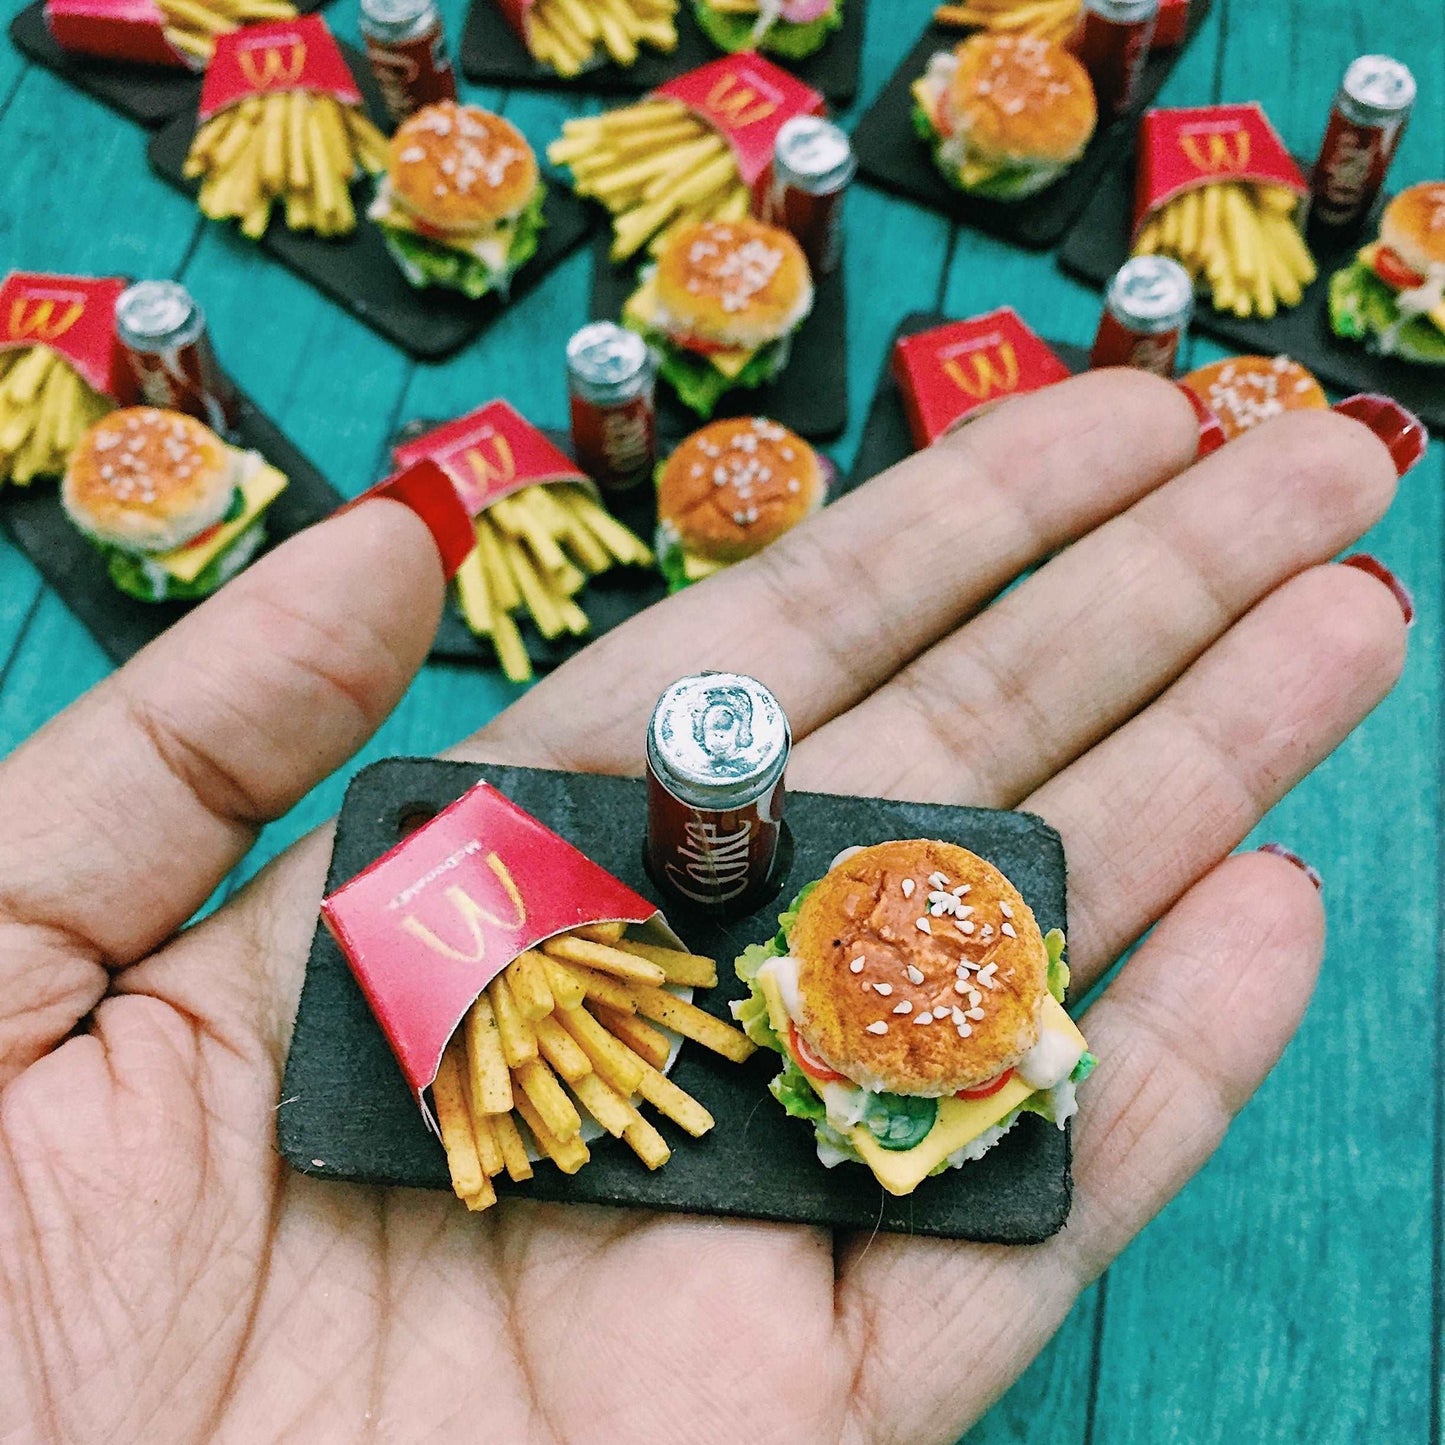 Burger Fries Coke Fast Food Miniature Food Magnet